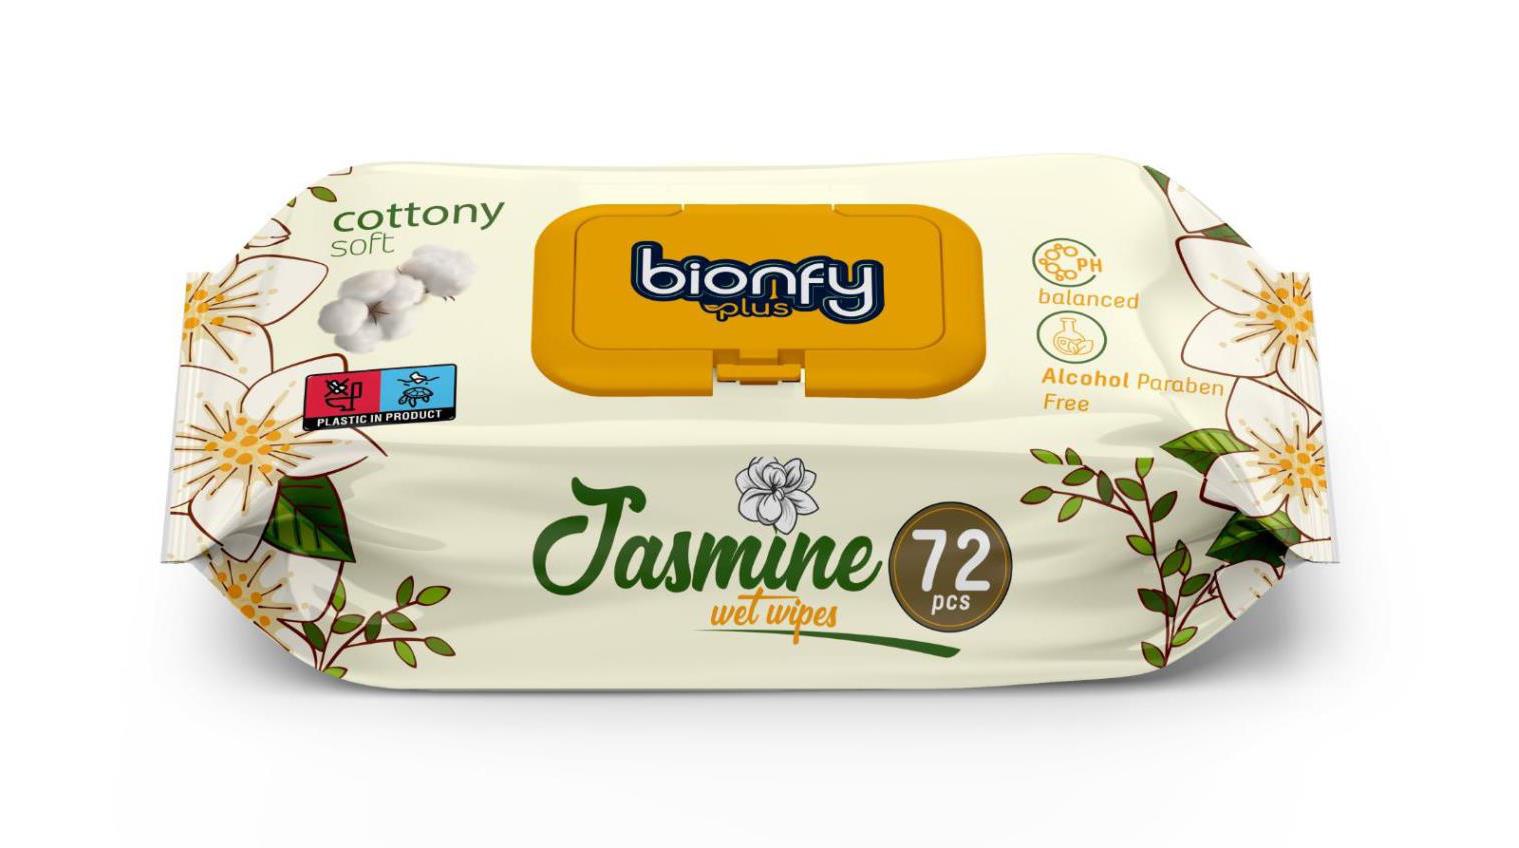 Bionfy 72 pcs Jasmine